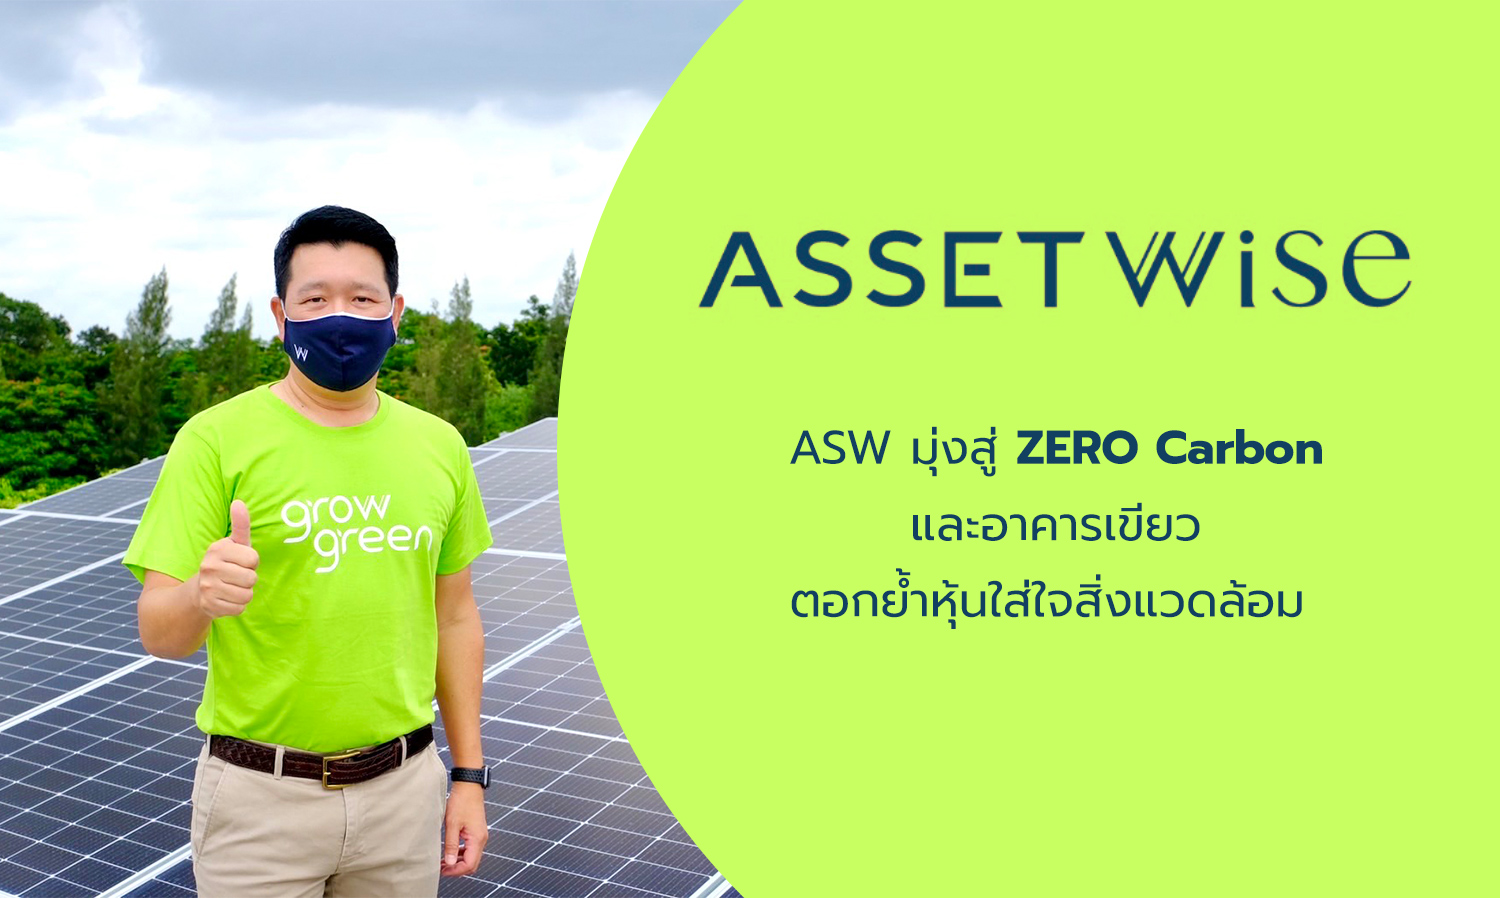 ASW มุ่งสู่ ZERO Carbon และอาคารเขียว ตอกย้ำหุ้นใส่ใจสิ่งแวดล้อม 